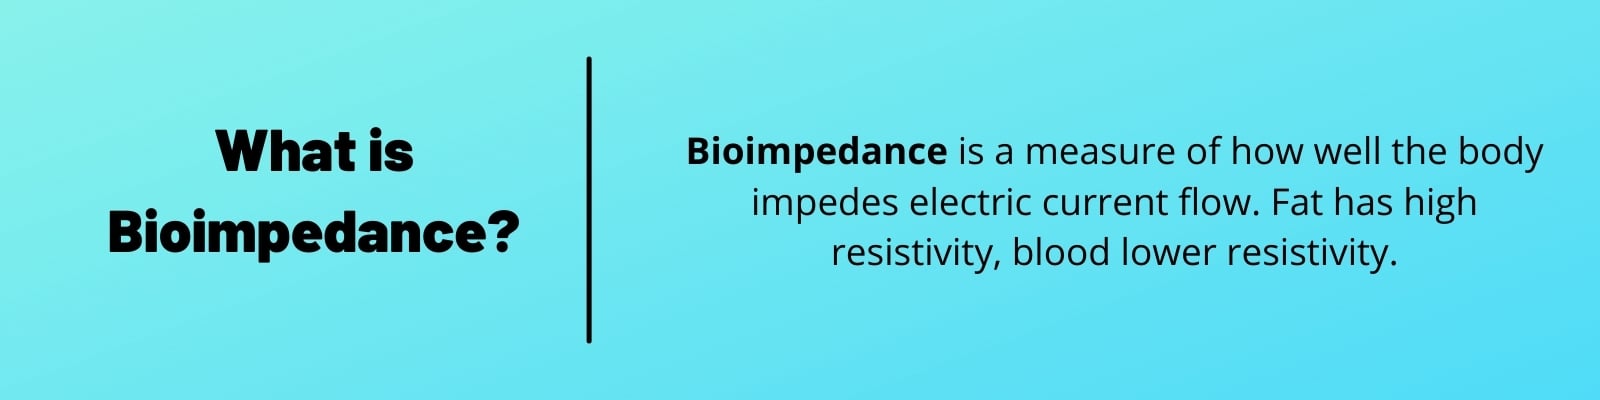 Bioimpedance_LympBlog